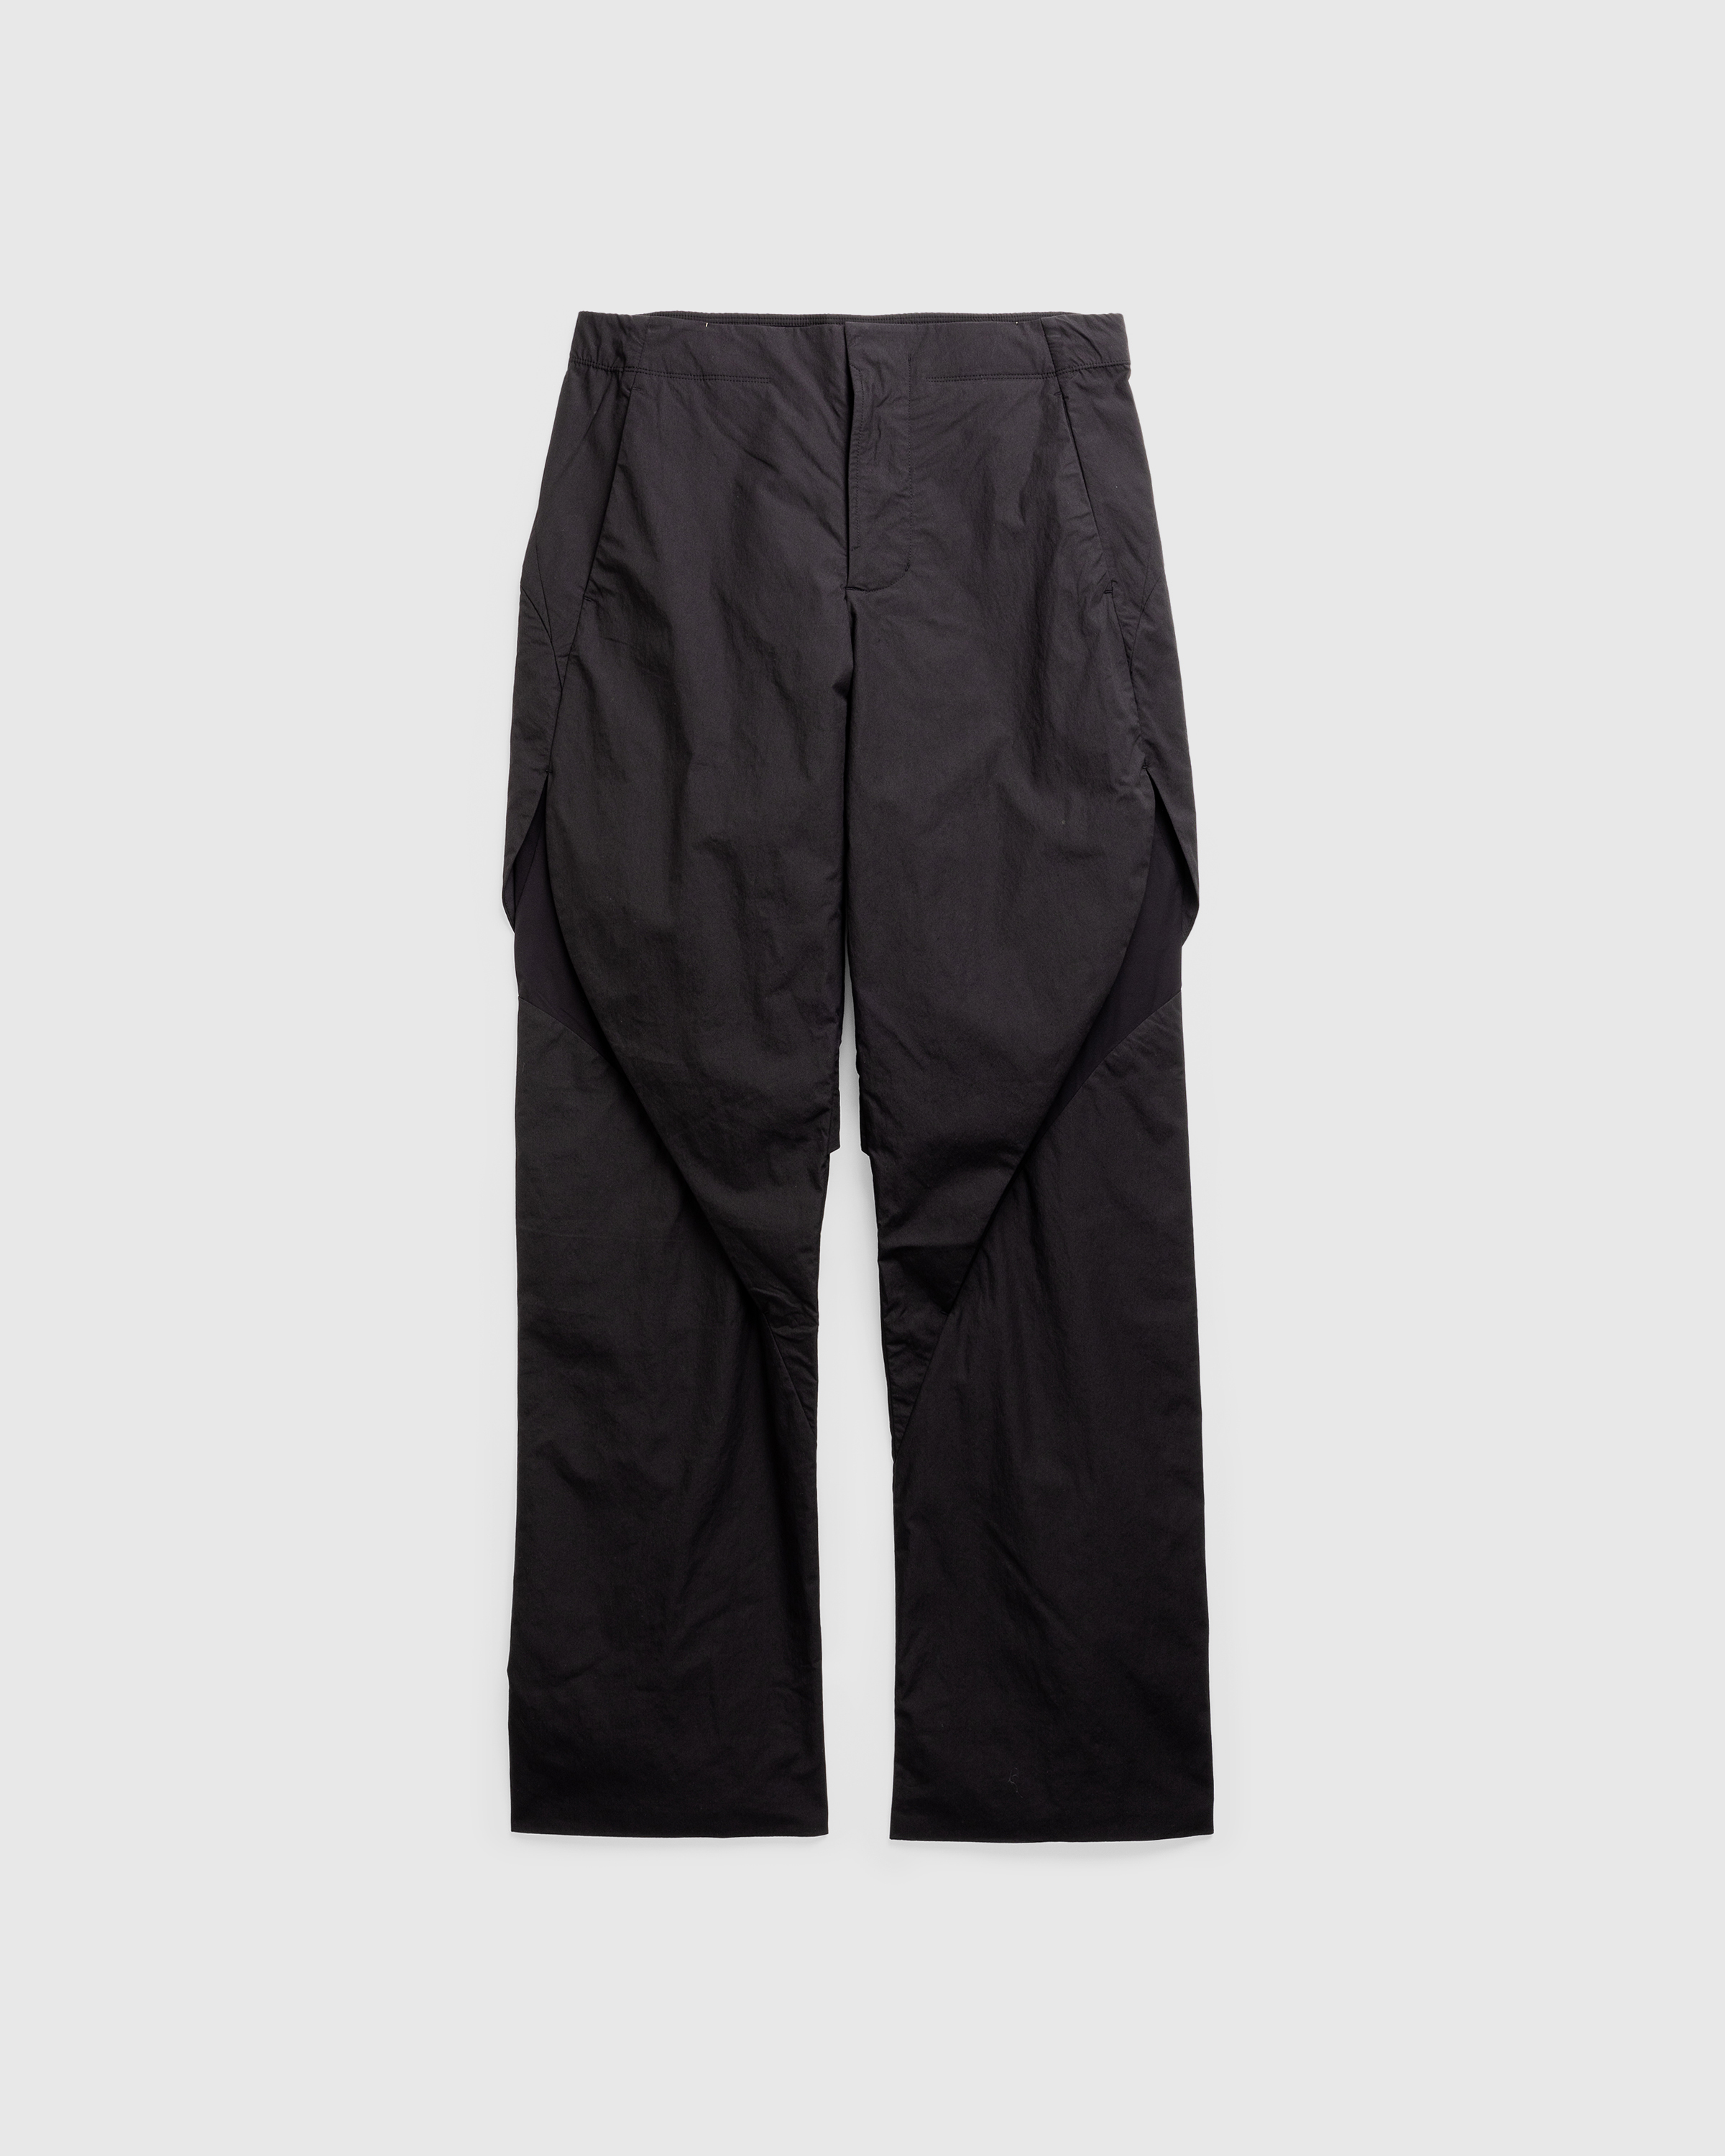 Post Archive Faction (PAF) – 6.0 Technical Pants Center Black - Trousers - Black - Image 1